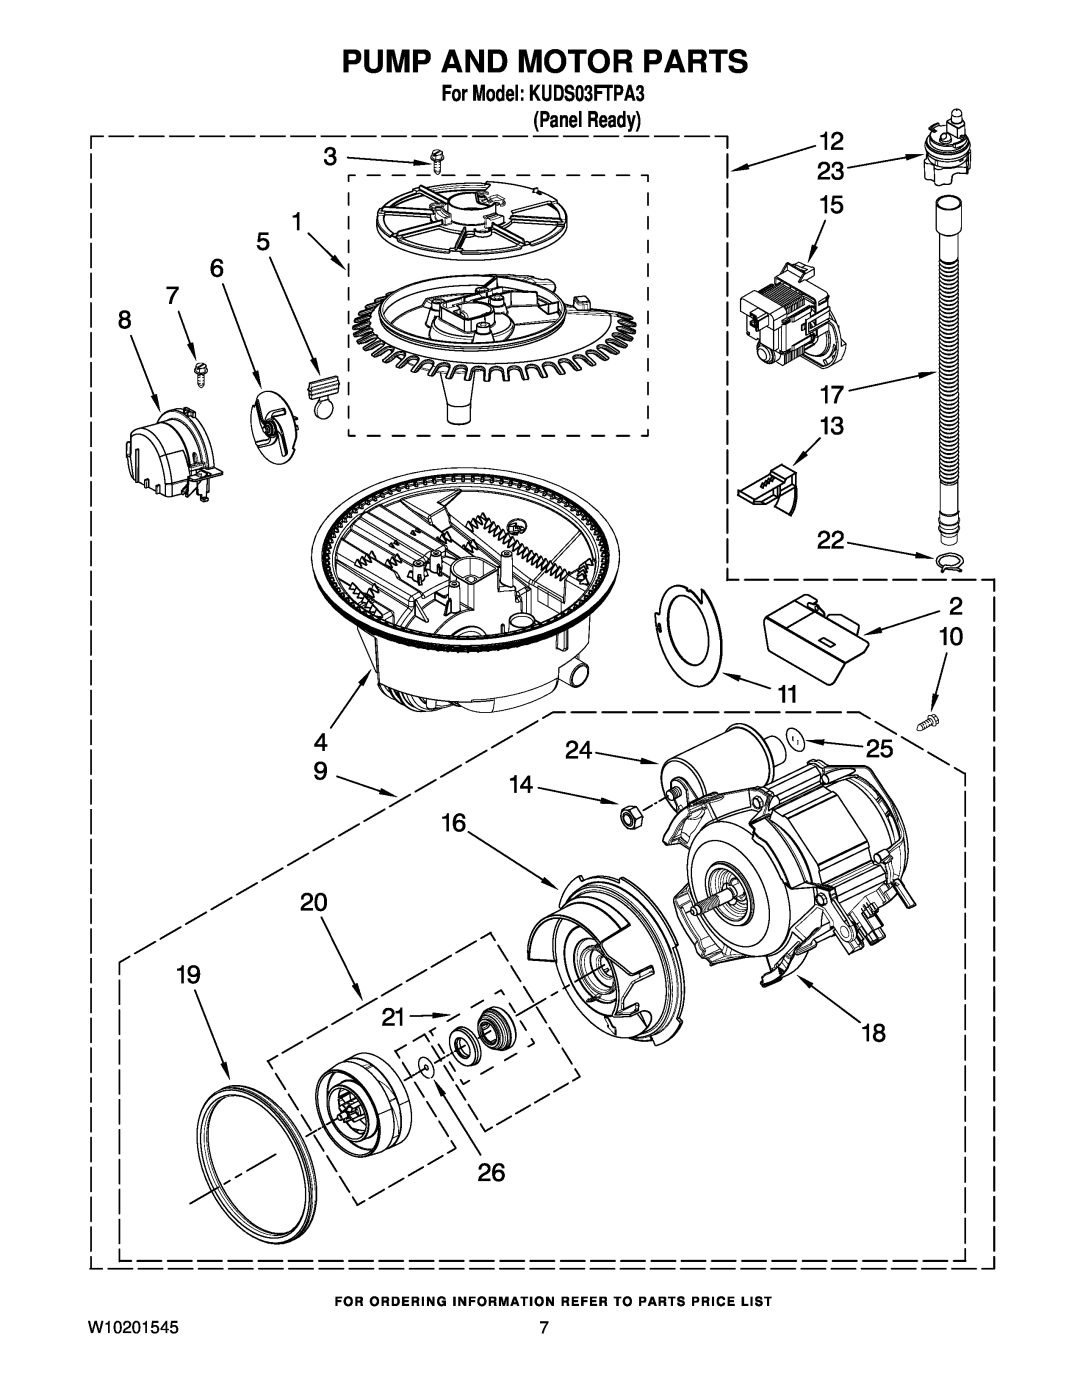 KitchenAid manual Pump And Motor Parts, For Model KUDS03FTPA3 Panel Ready 